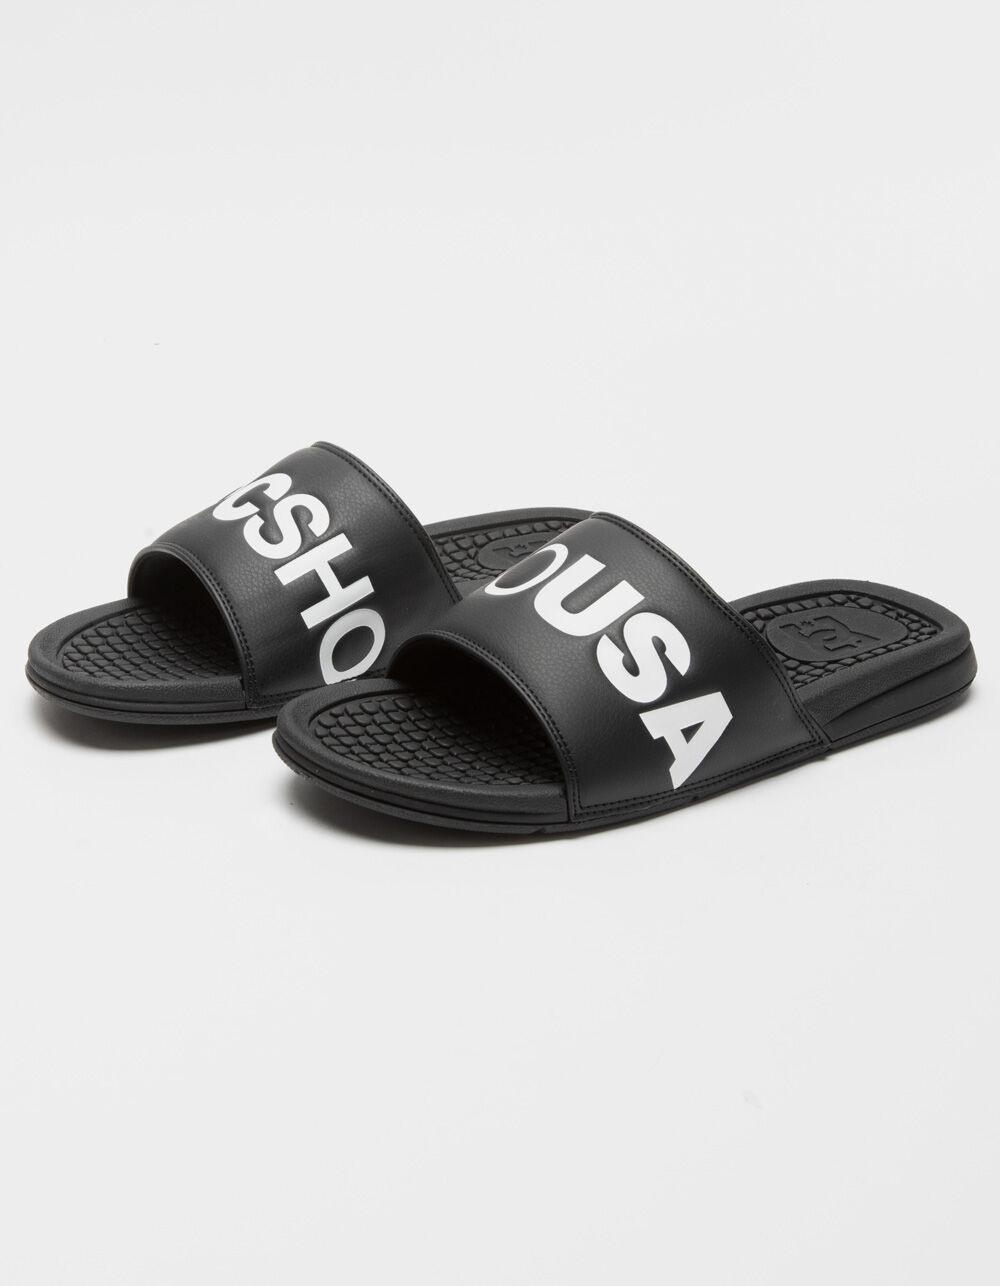 DC SHOES Bolsa SE Mens Slide Sandals - BLACK/WHITE | Tillys